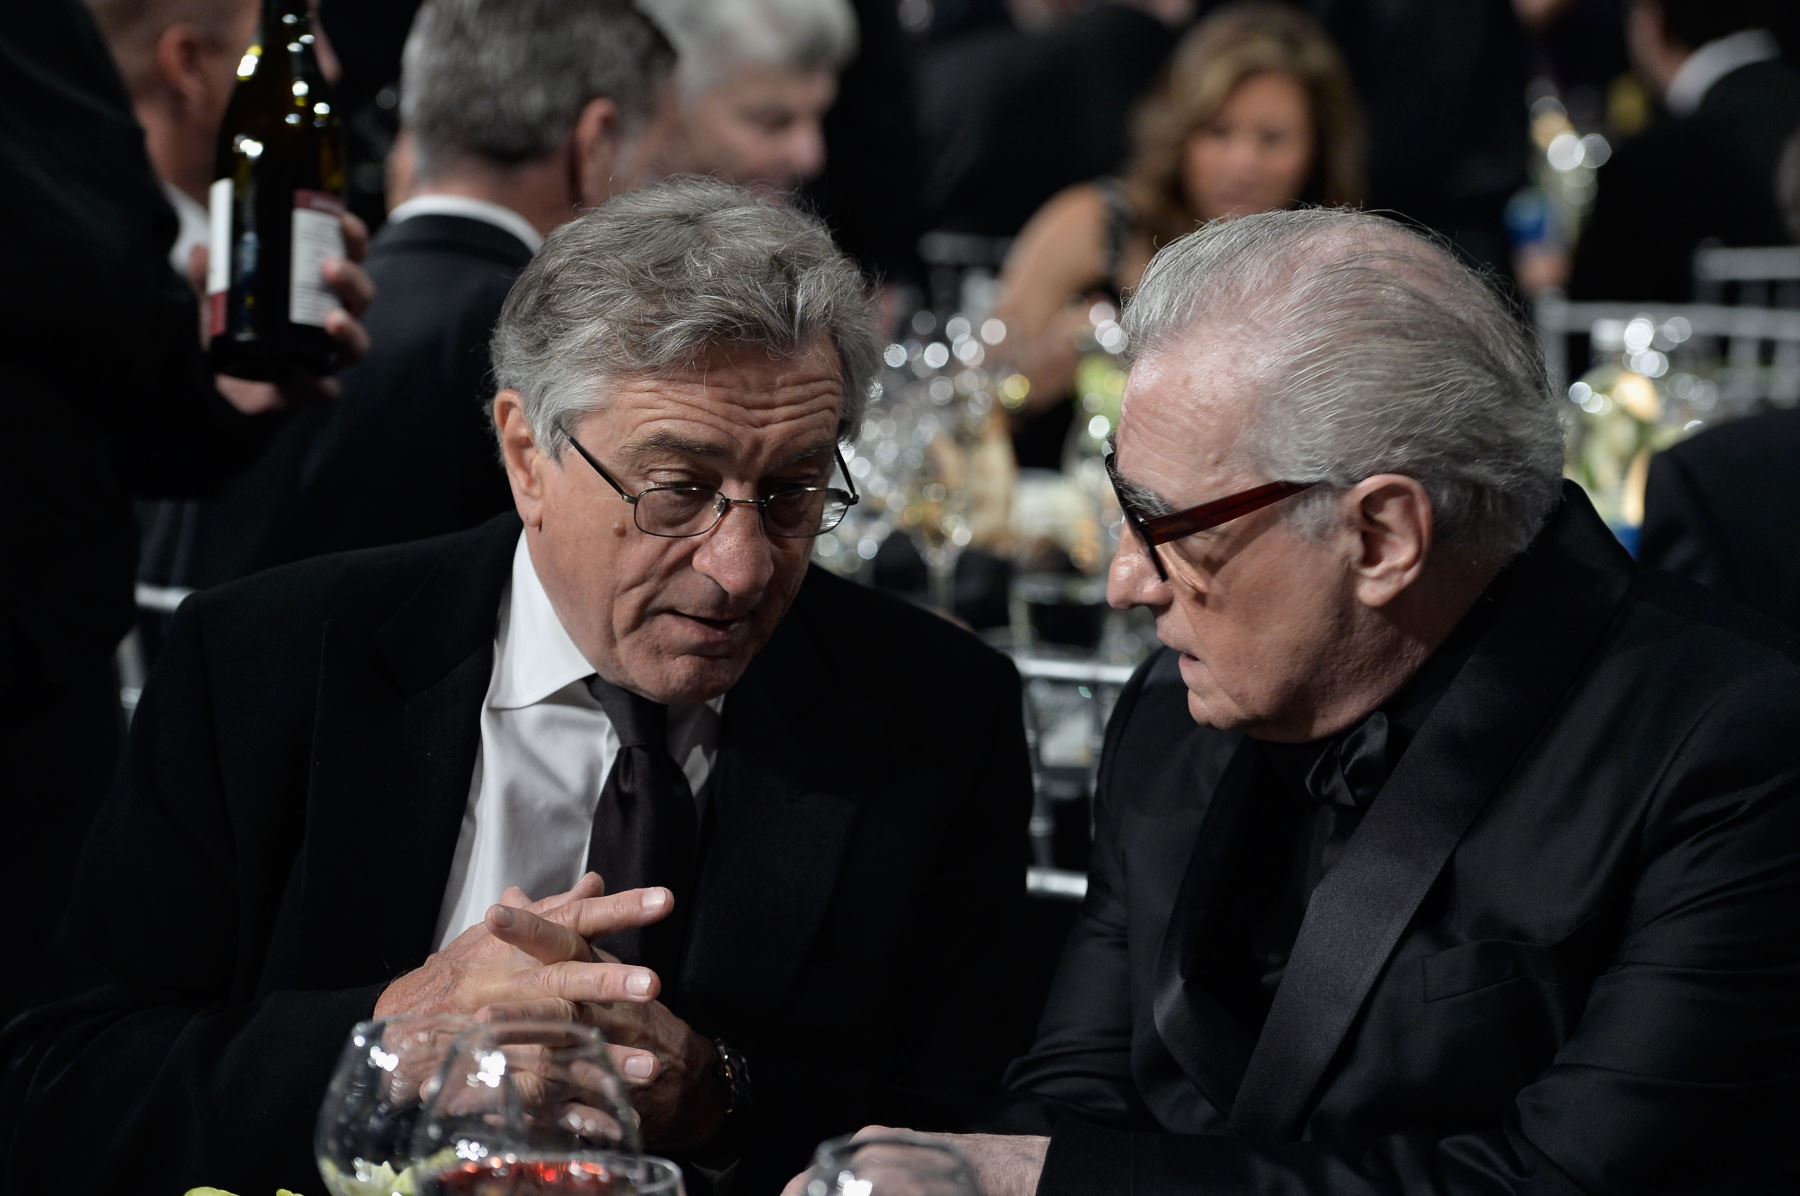 HOLLYWOOD, CA - 06 de junio: El actor Robert De Niro (L) y el director Martin Scorsese asisten al 41º Premio AFI Life Achievement en honor a Mel Brooks en el Dolby Theatre el 6 de junio de 2013 en Hollywood, California. AFP